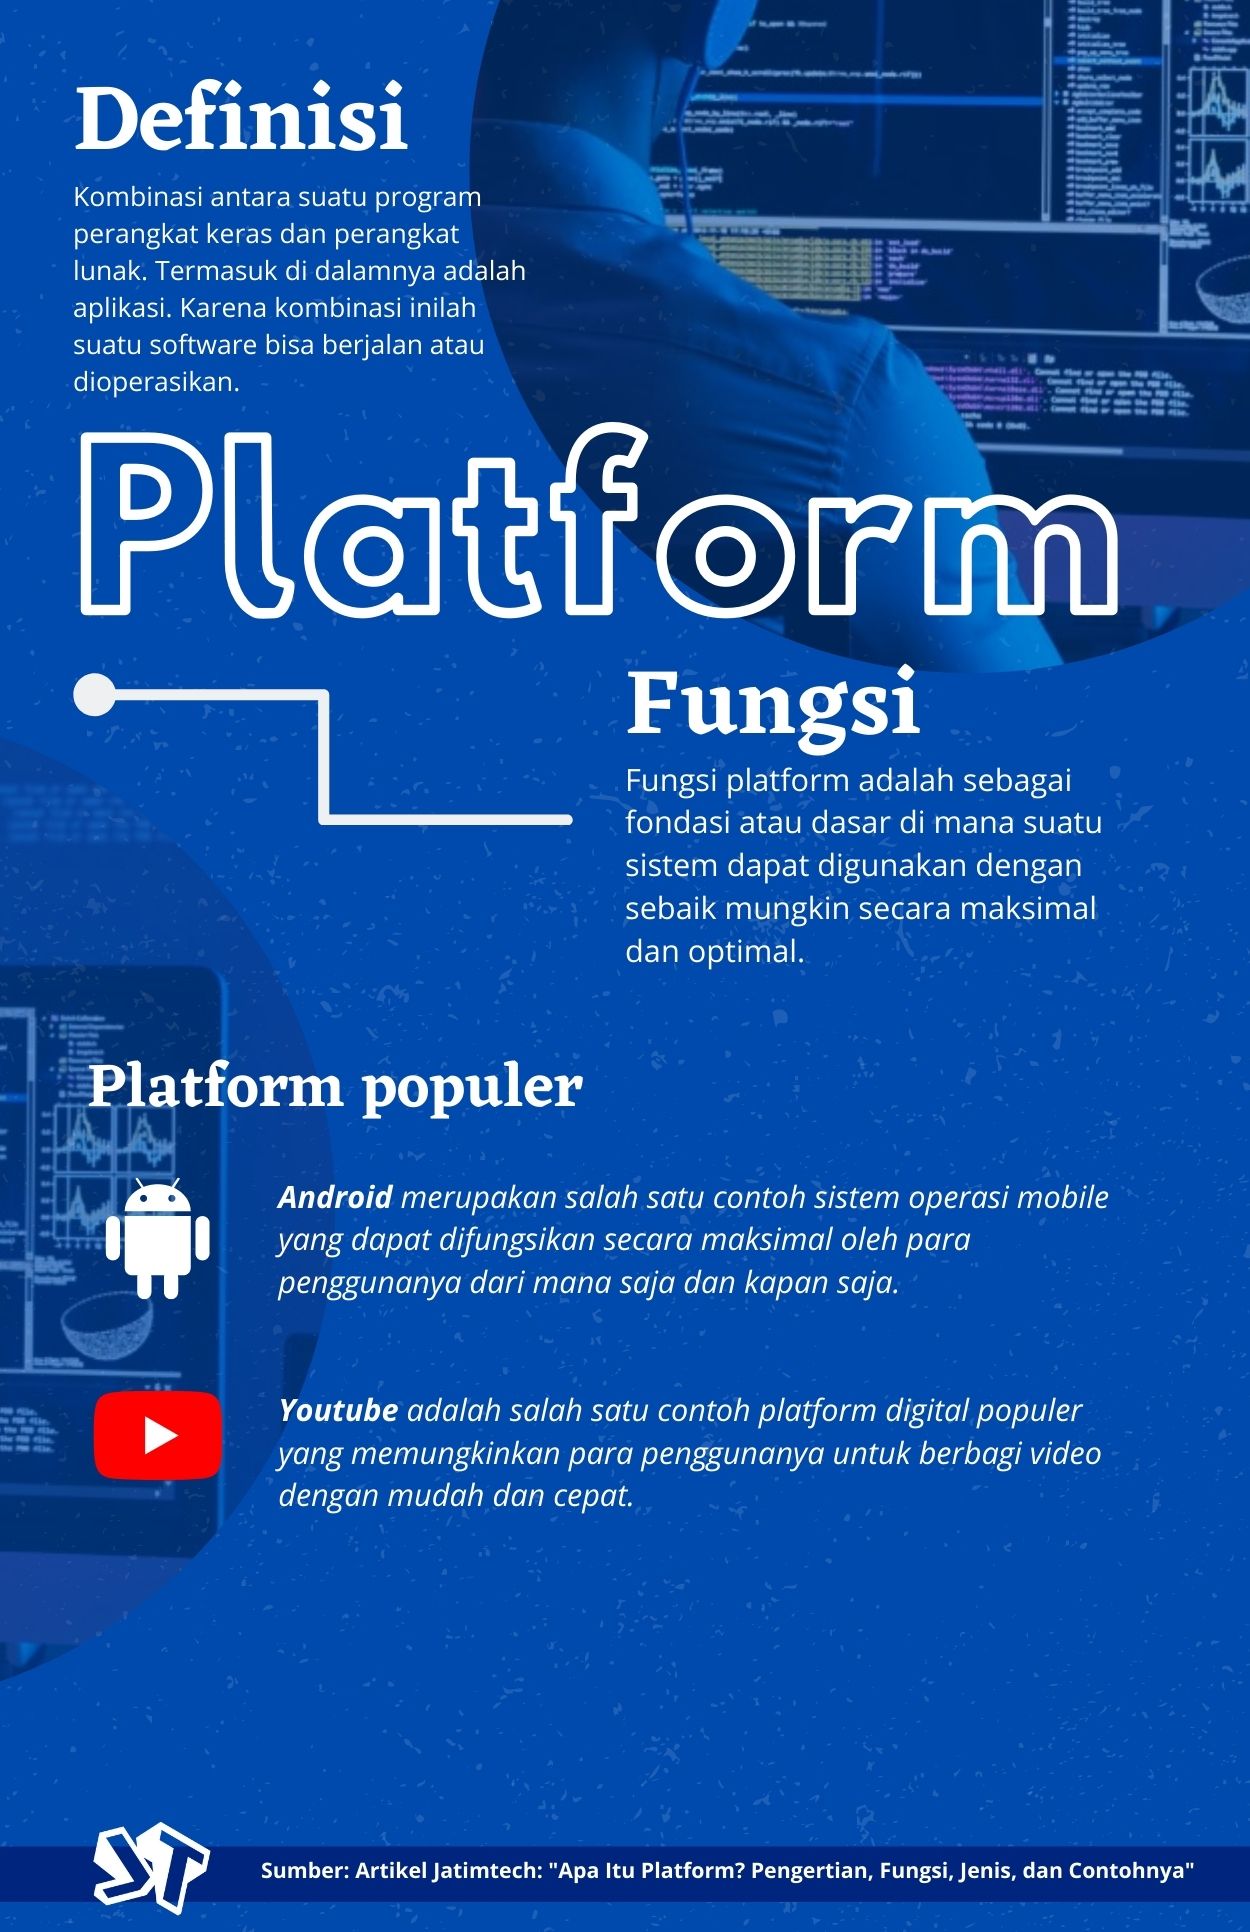 Platform digital artinya